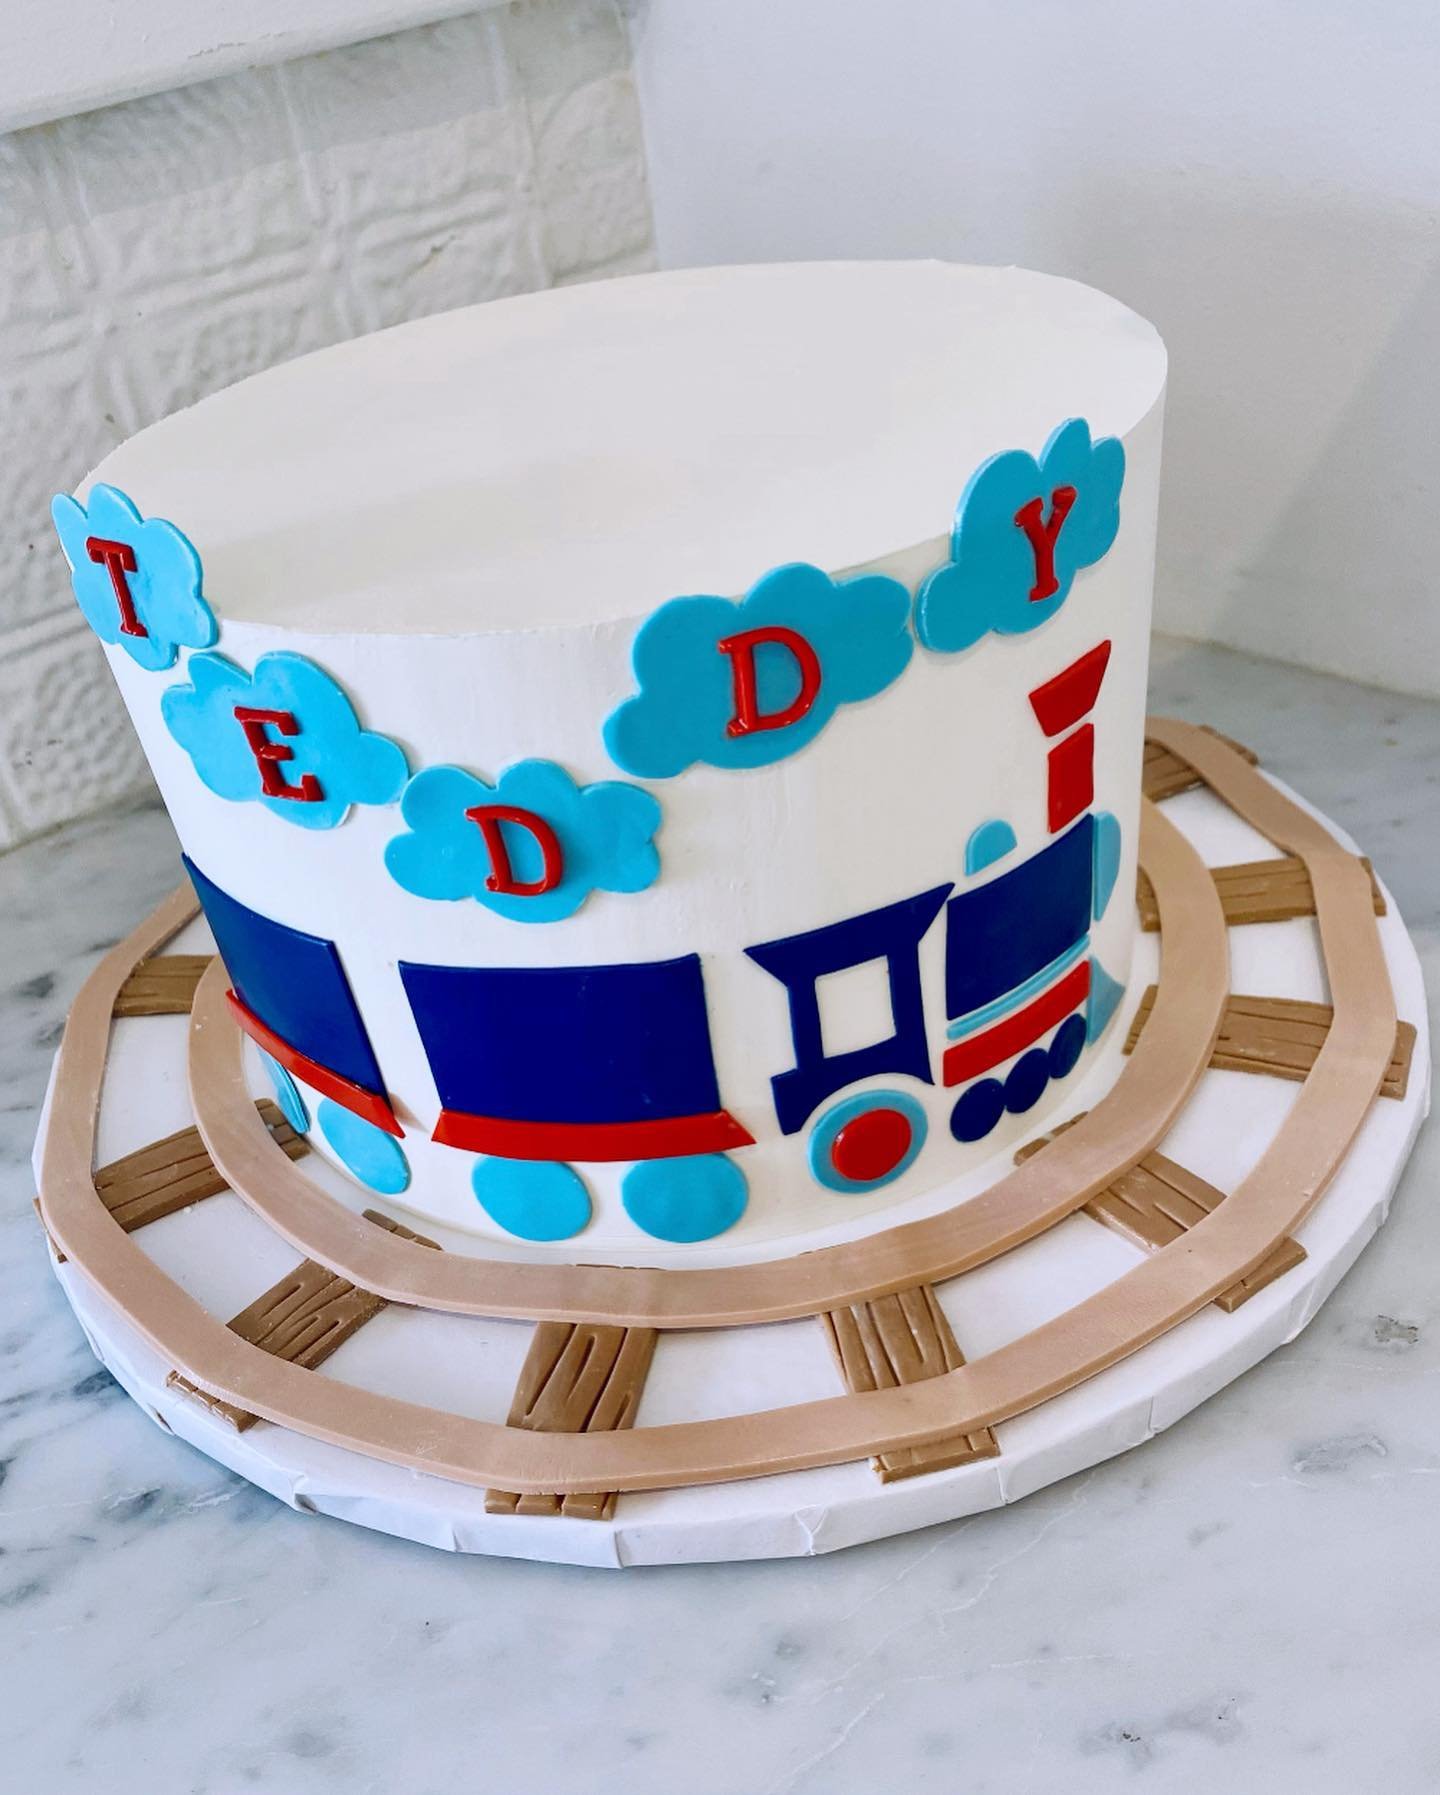 🛤️🚂🛤️

#sweetandflour #secaucus #nj #njbakery #jersey #customcakes #cakelife #cupcakes #smallbusiness

#bakery #cake #baking #dessert #pastry #foodporn #instafood #chocolate #foodie #cookies #cakedecorating #birthdaycake #foodphotography #cupcakes